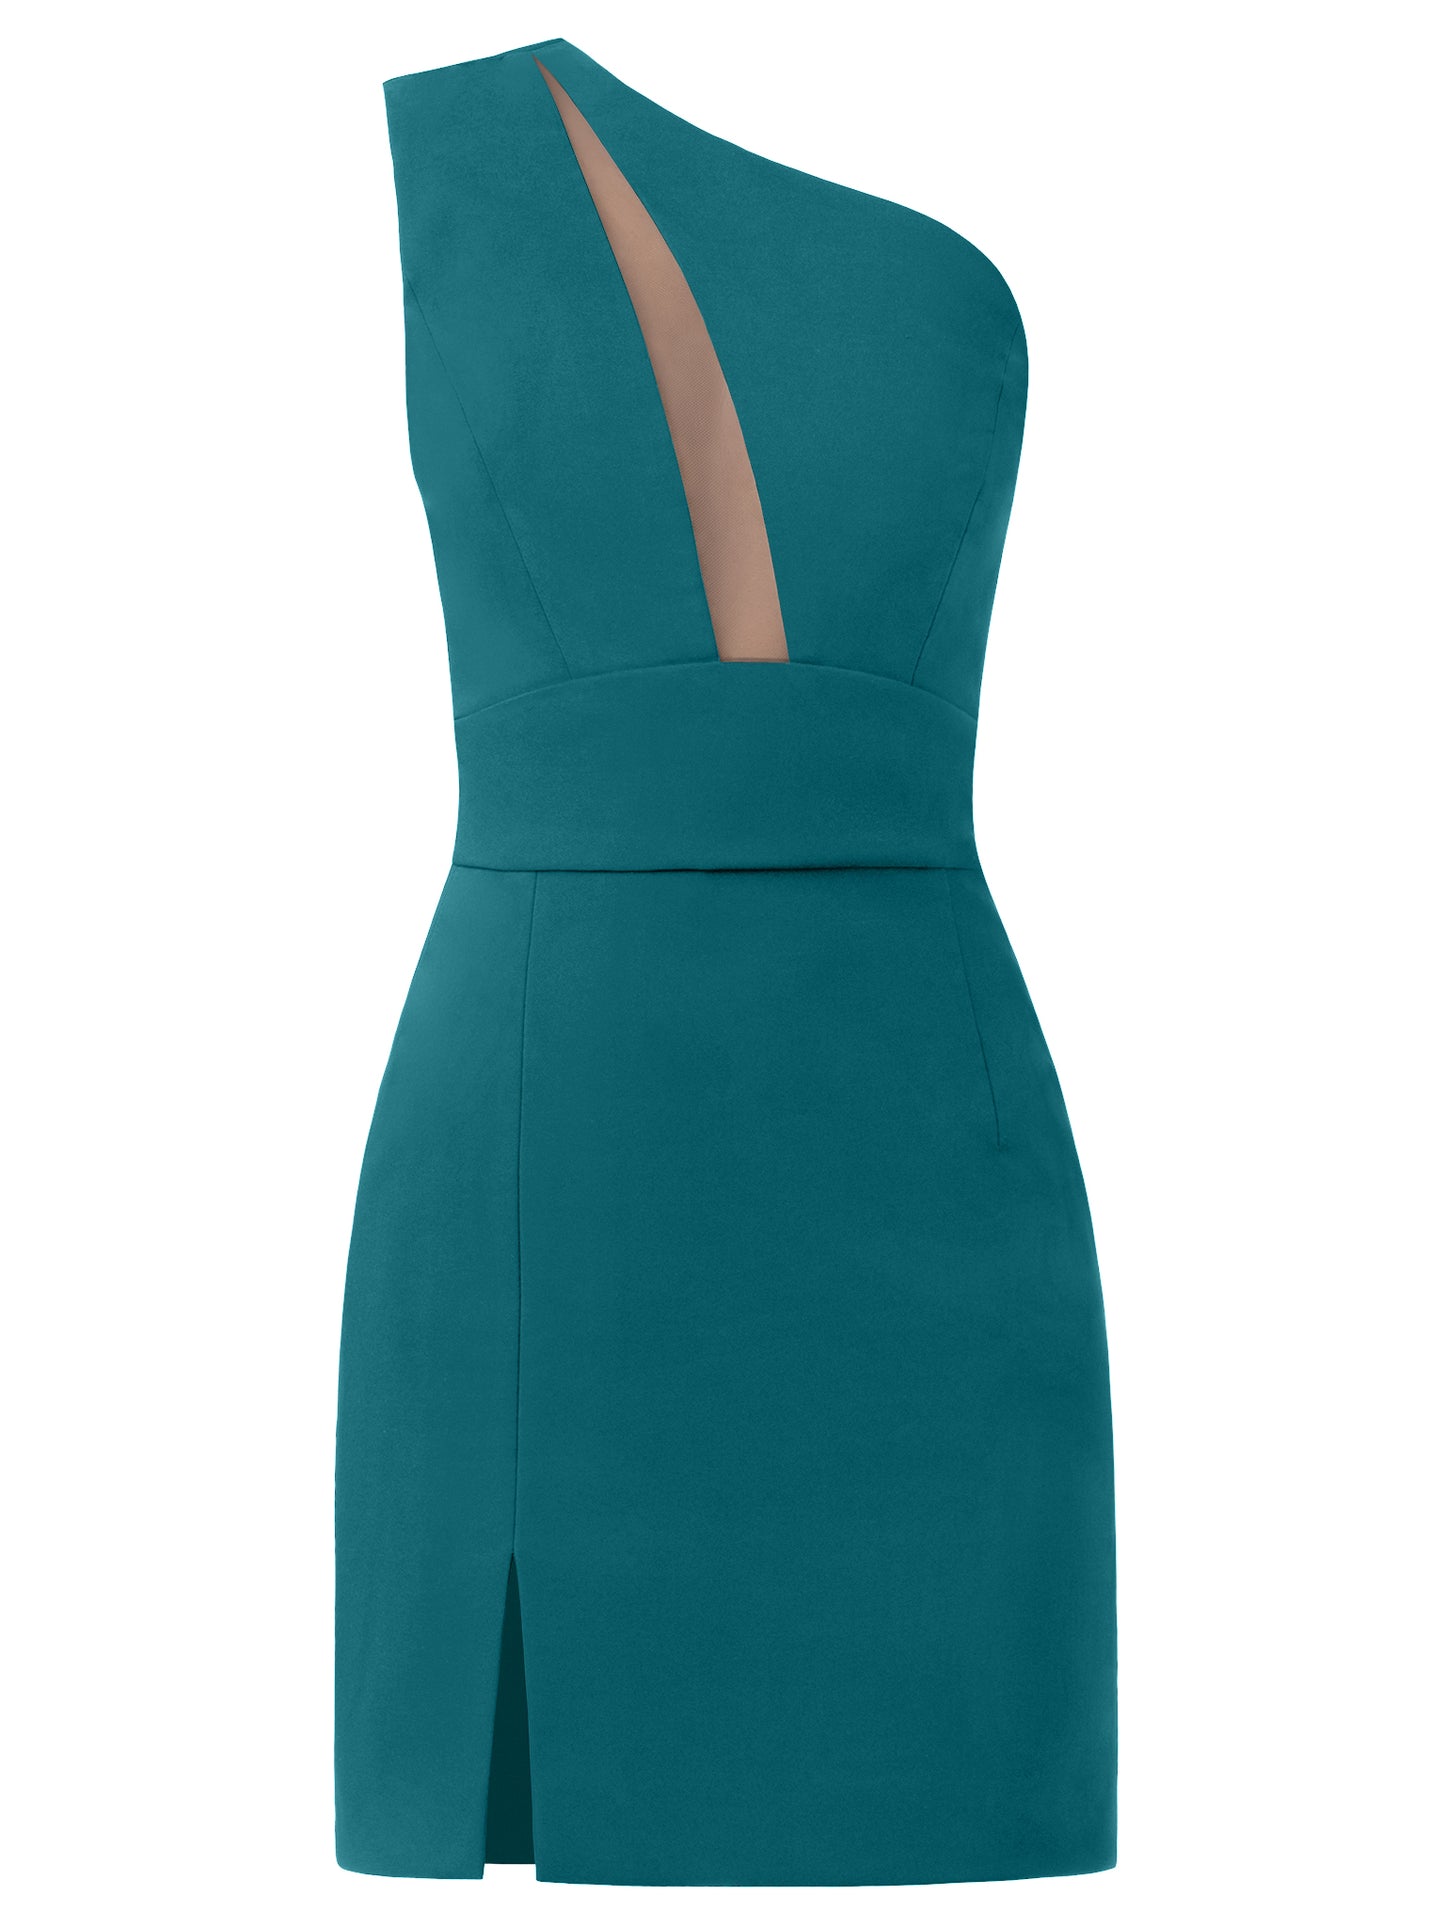 Love Weapon Mini Dress - Turquoise by Tia Dorraine Women's Luxury Fashion Designer Clothing Brand